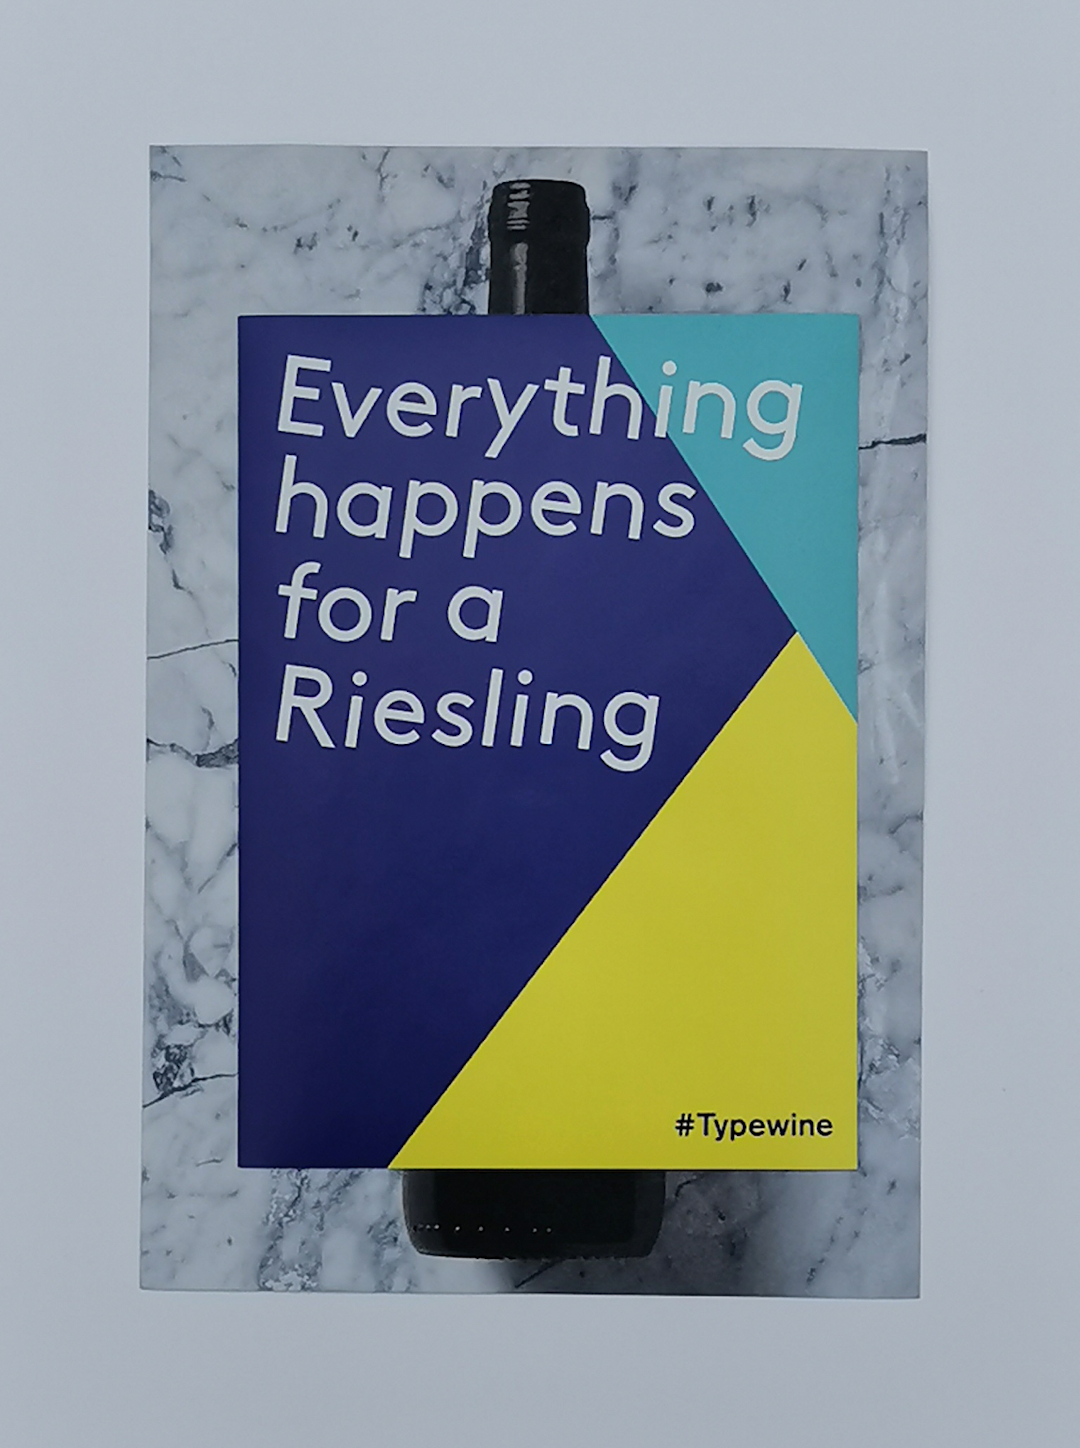 Typewine "Everthing happens for a Riesling" Weinetikett